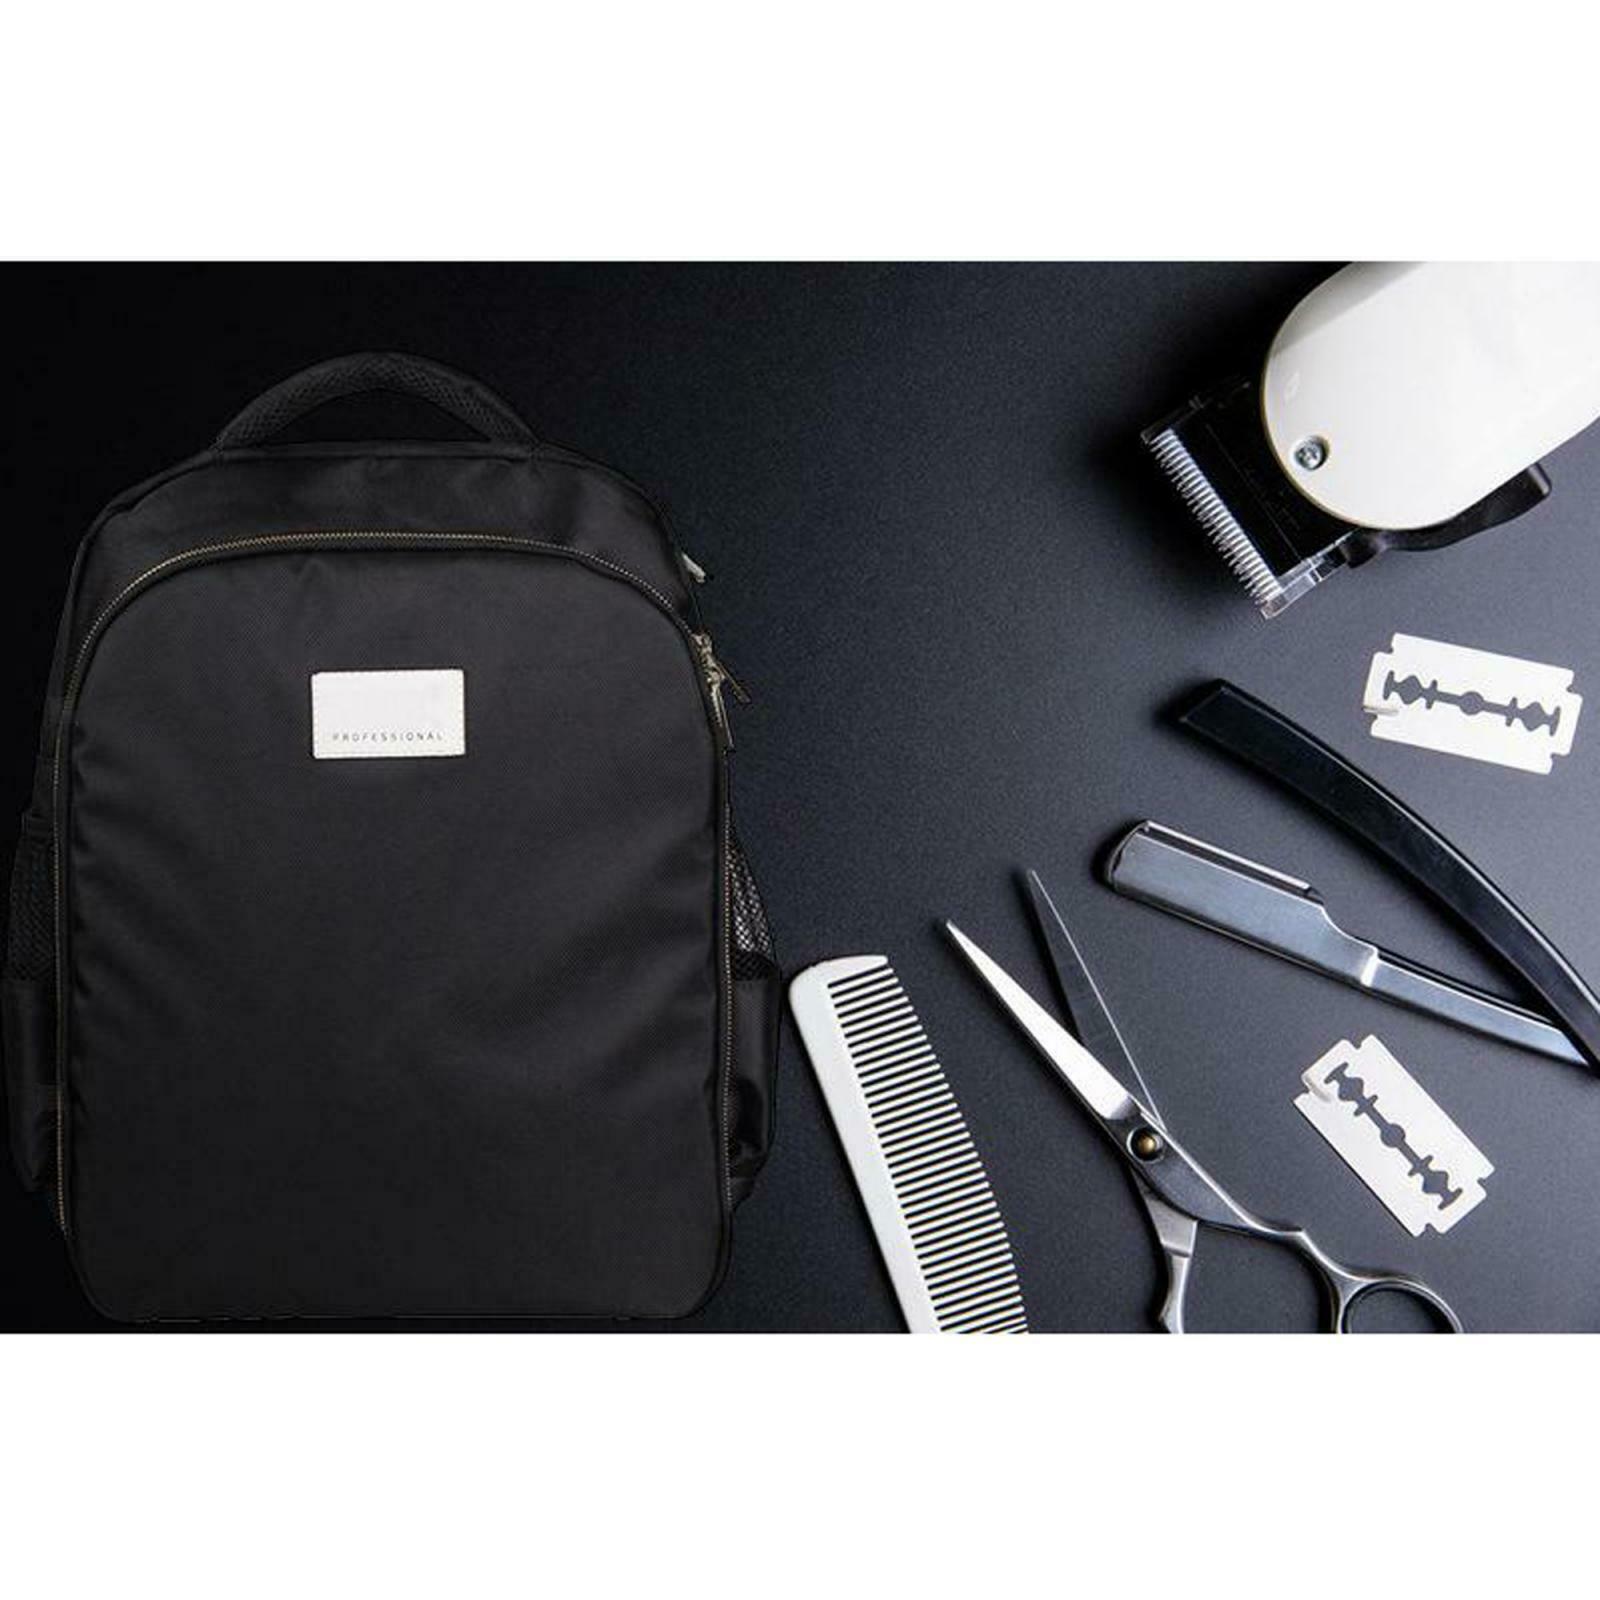 Barber Travel Salon Styling Tool Carrier Backpack Storage Case Organizer